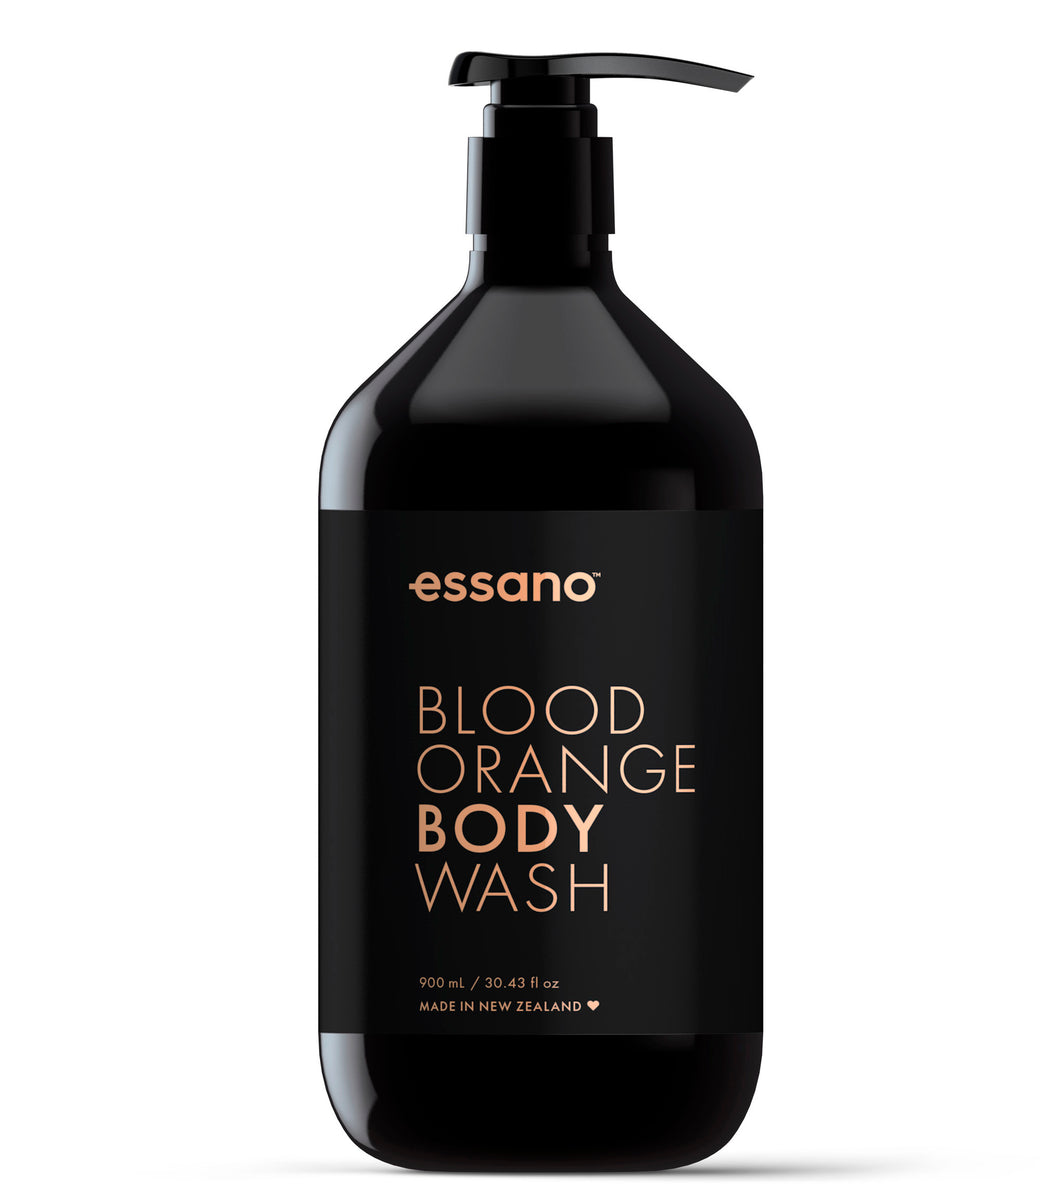 Blood Orange Body Wash